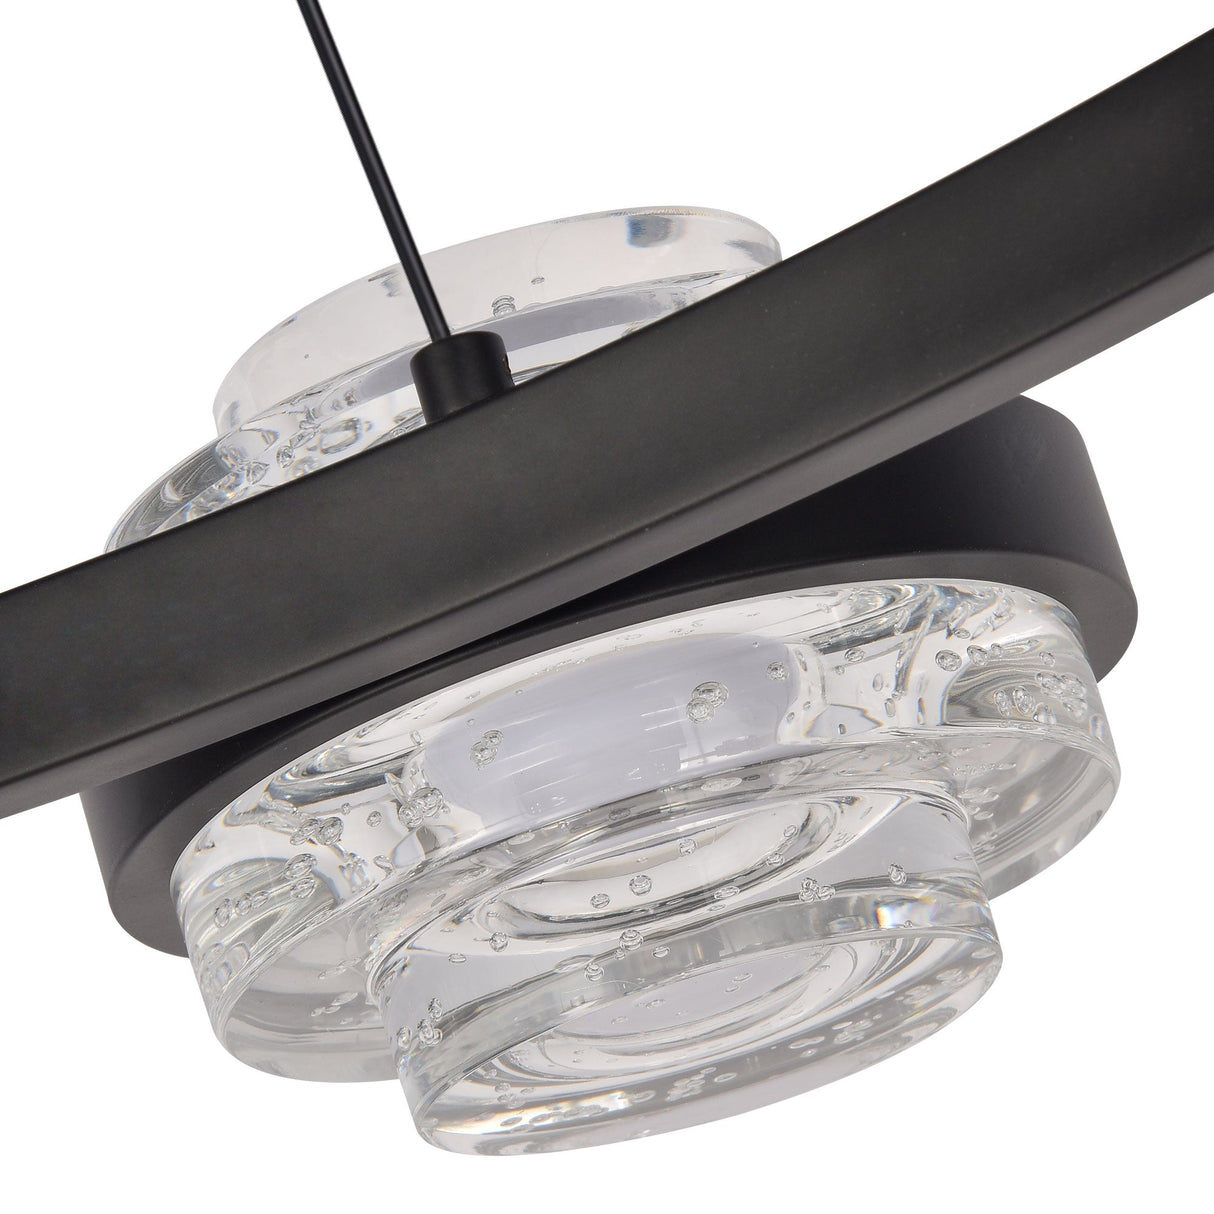 VONN Artisan Milano VAC3338BL 33" Integrated LED ETL Certified Pendant, Height Adjustable Chandelier, Black